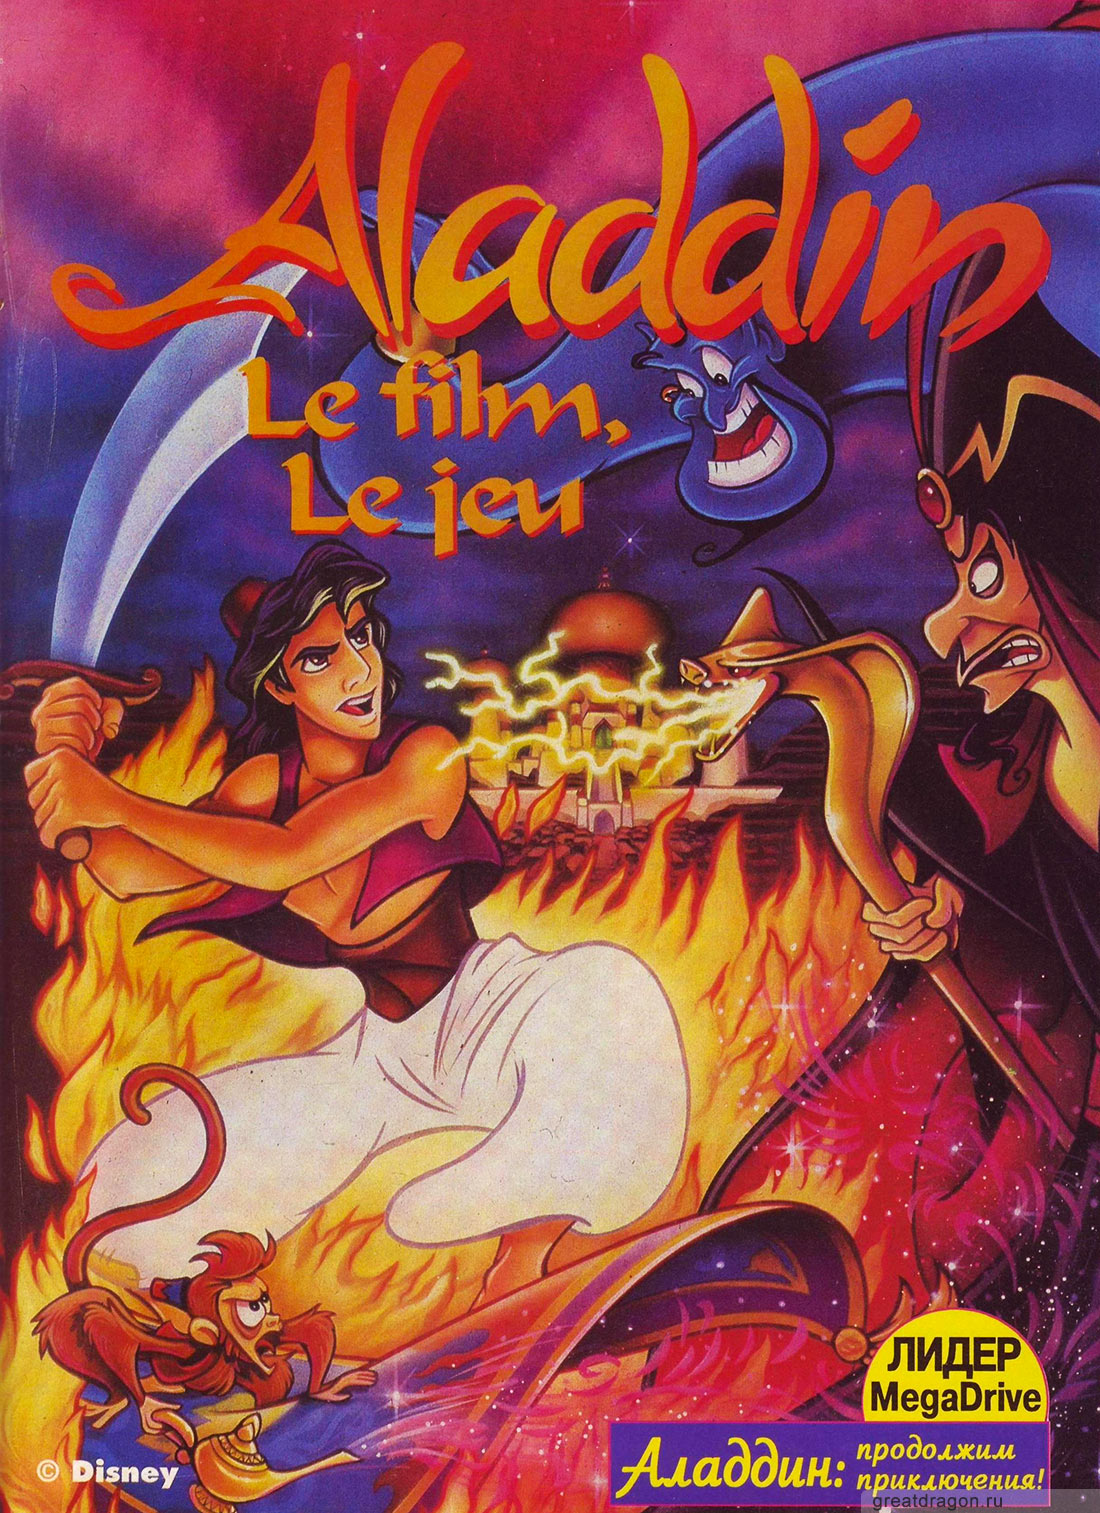 VAD 11 RU Aladdin advert.jpg